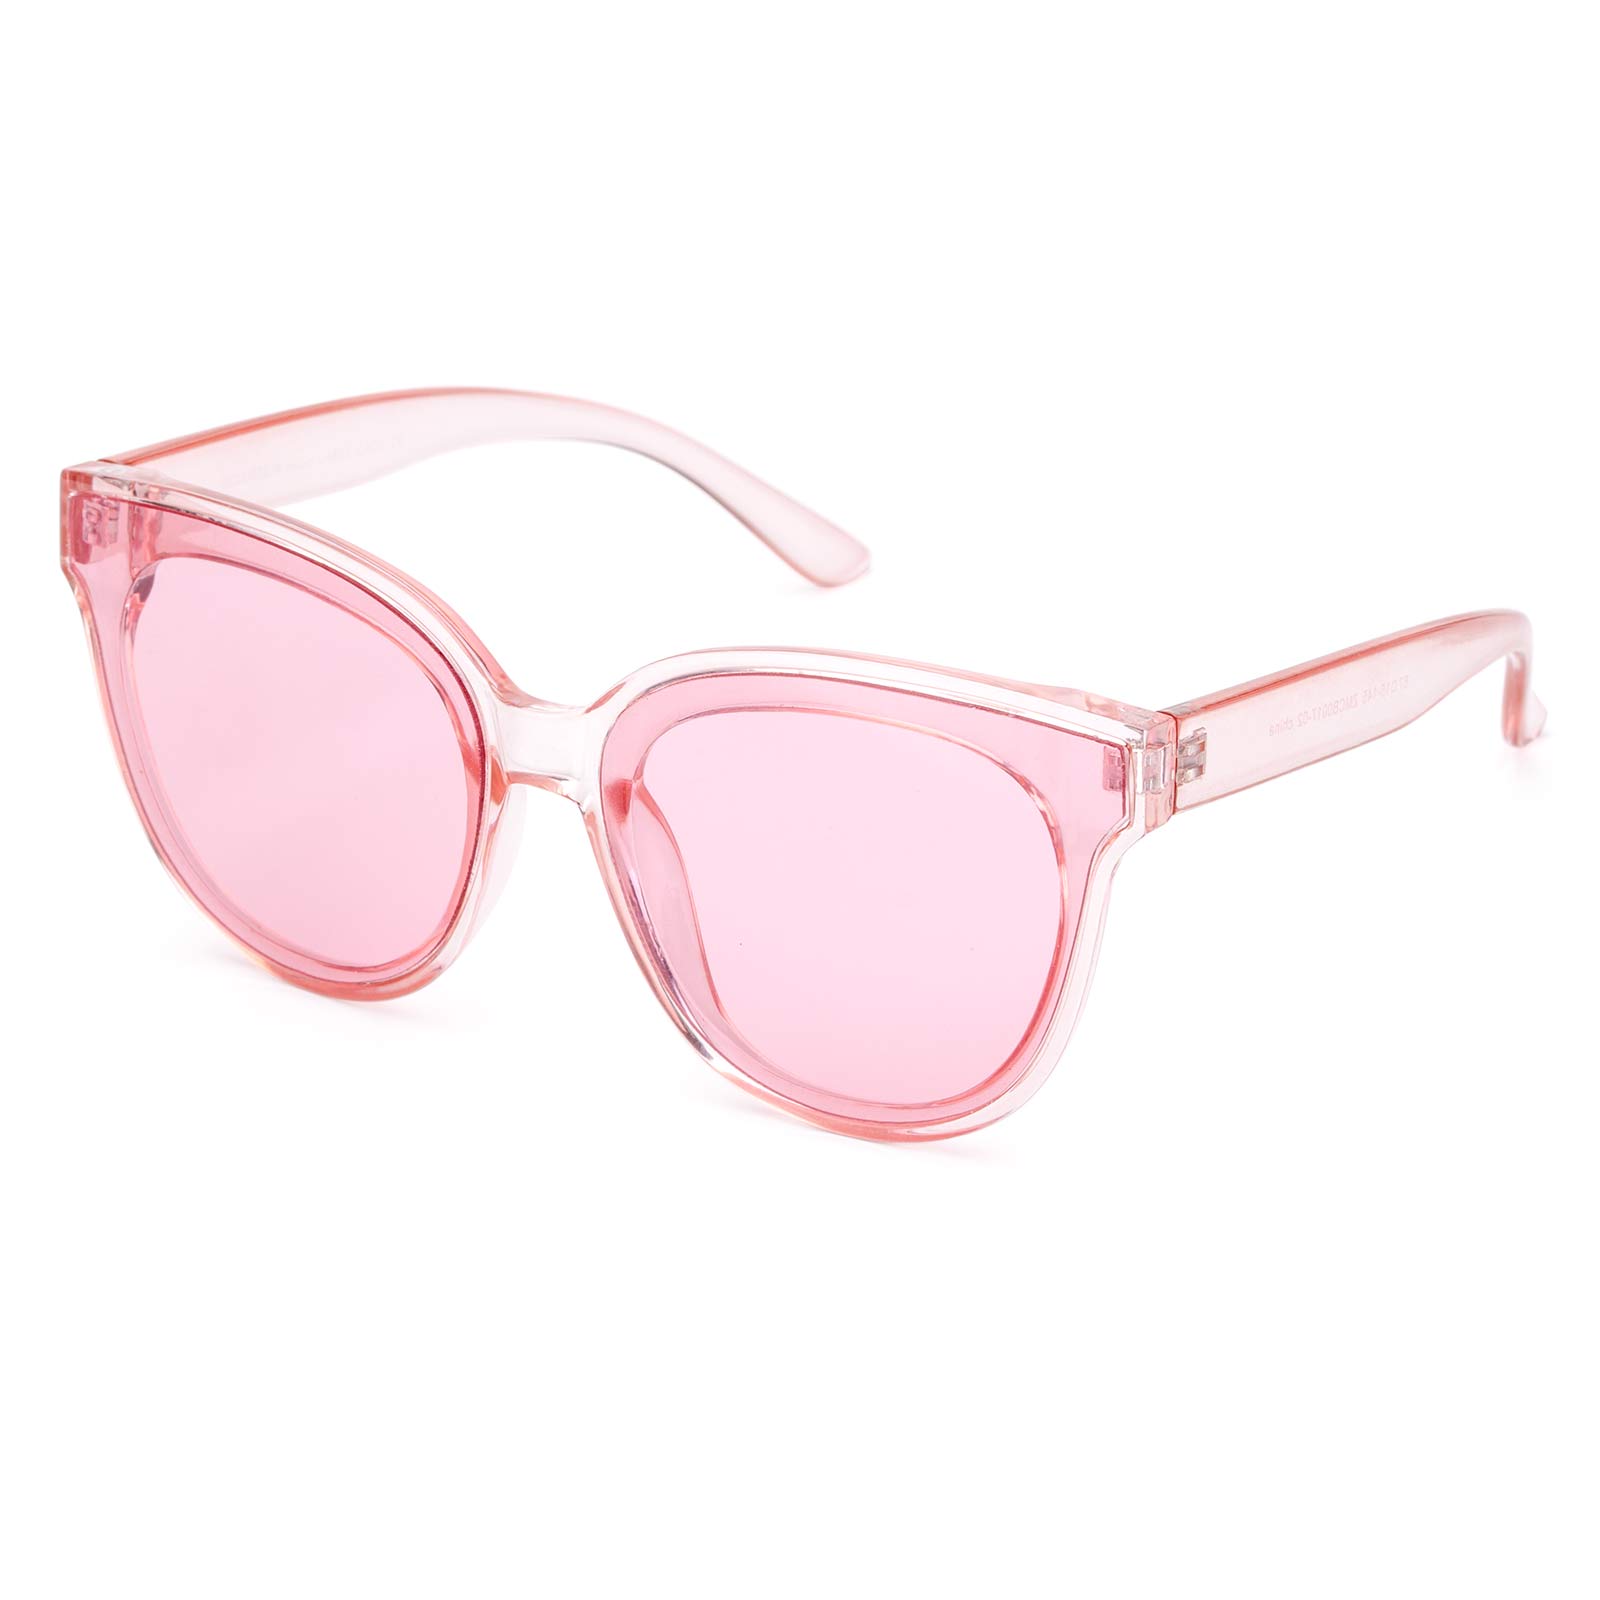 Sunglasses for Women, Cat Eye Style, 100% UV Blocking Sun Glasses with Mirror Lens